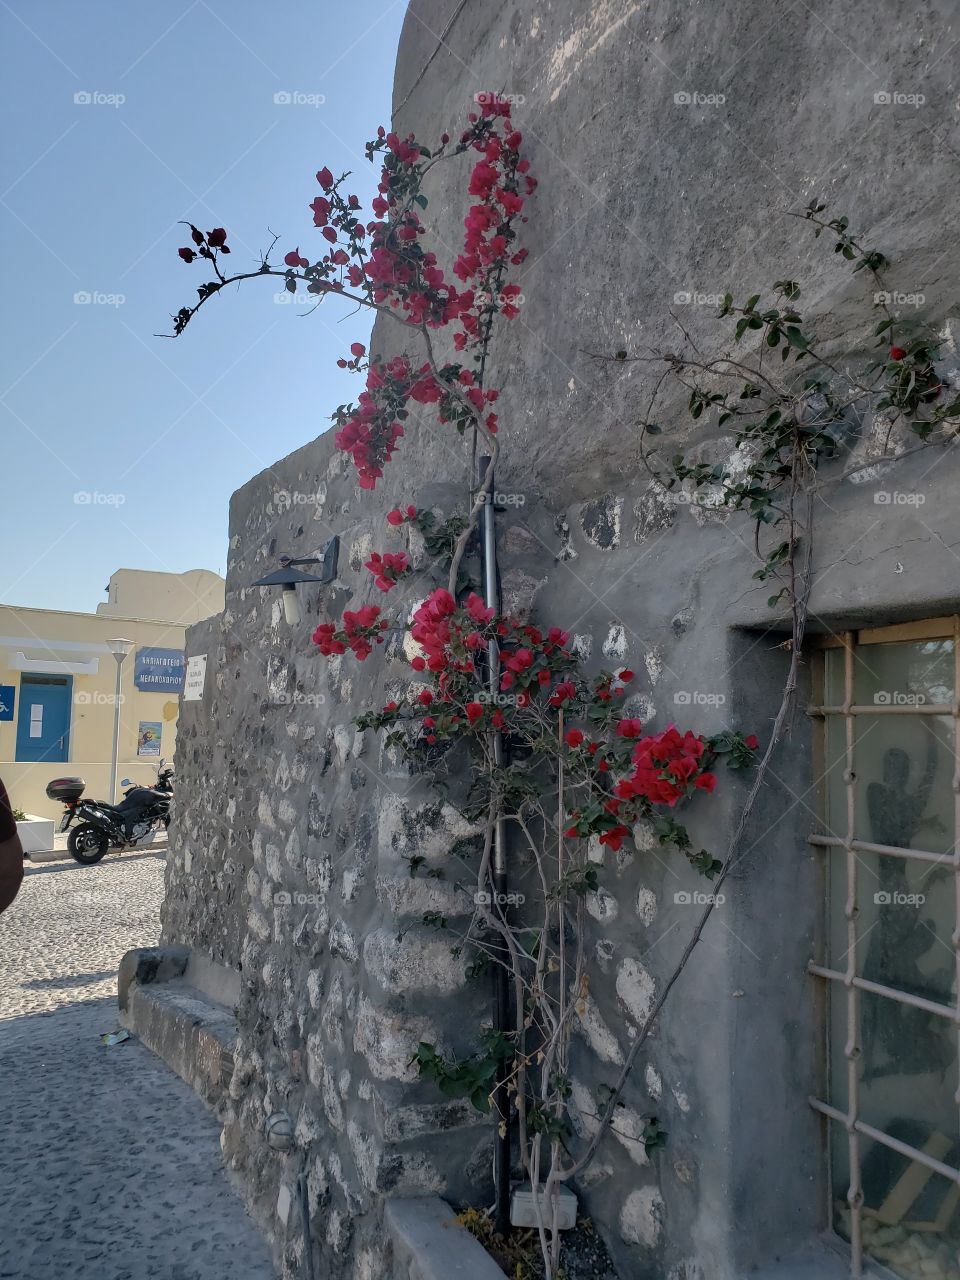 Flowers climbing up a building in Santorini, Greece